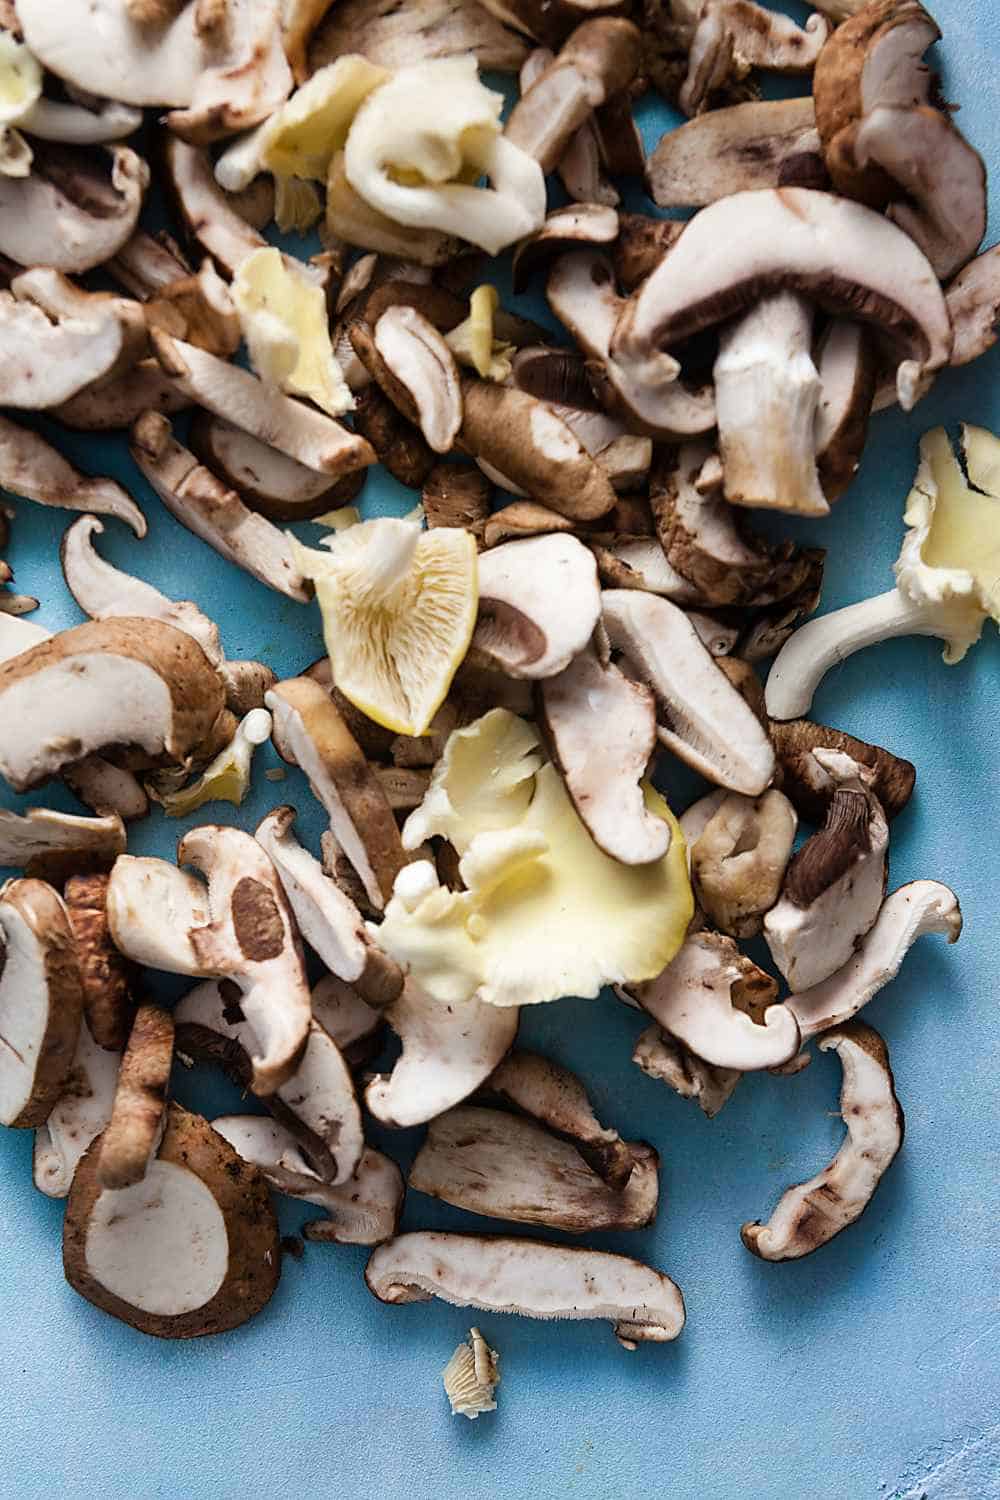 variety of mushrooms on blue background